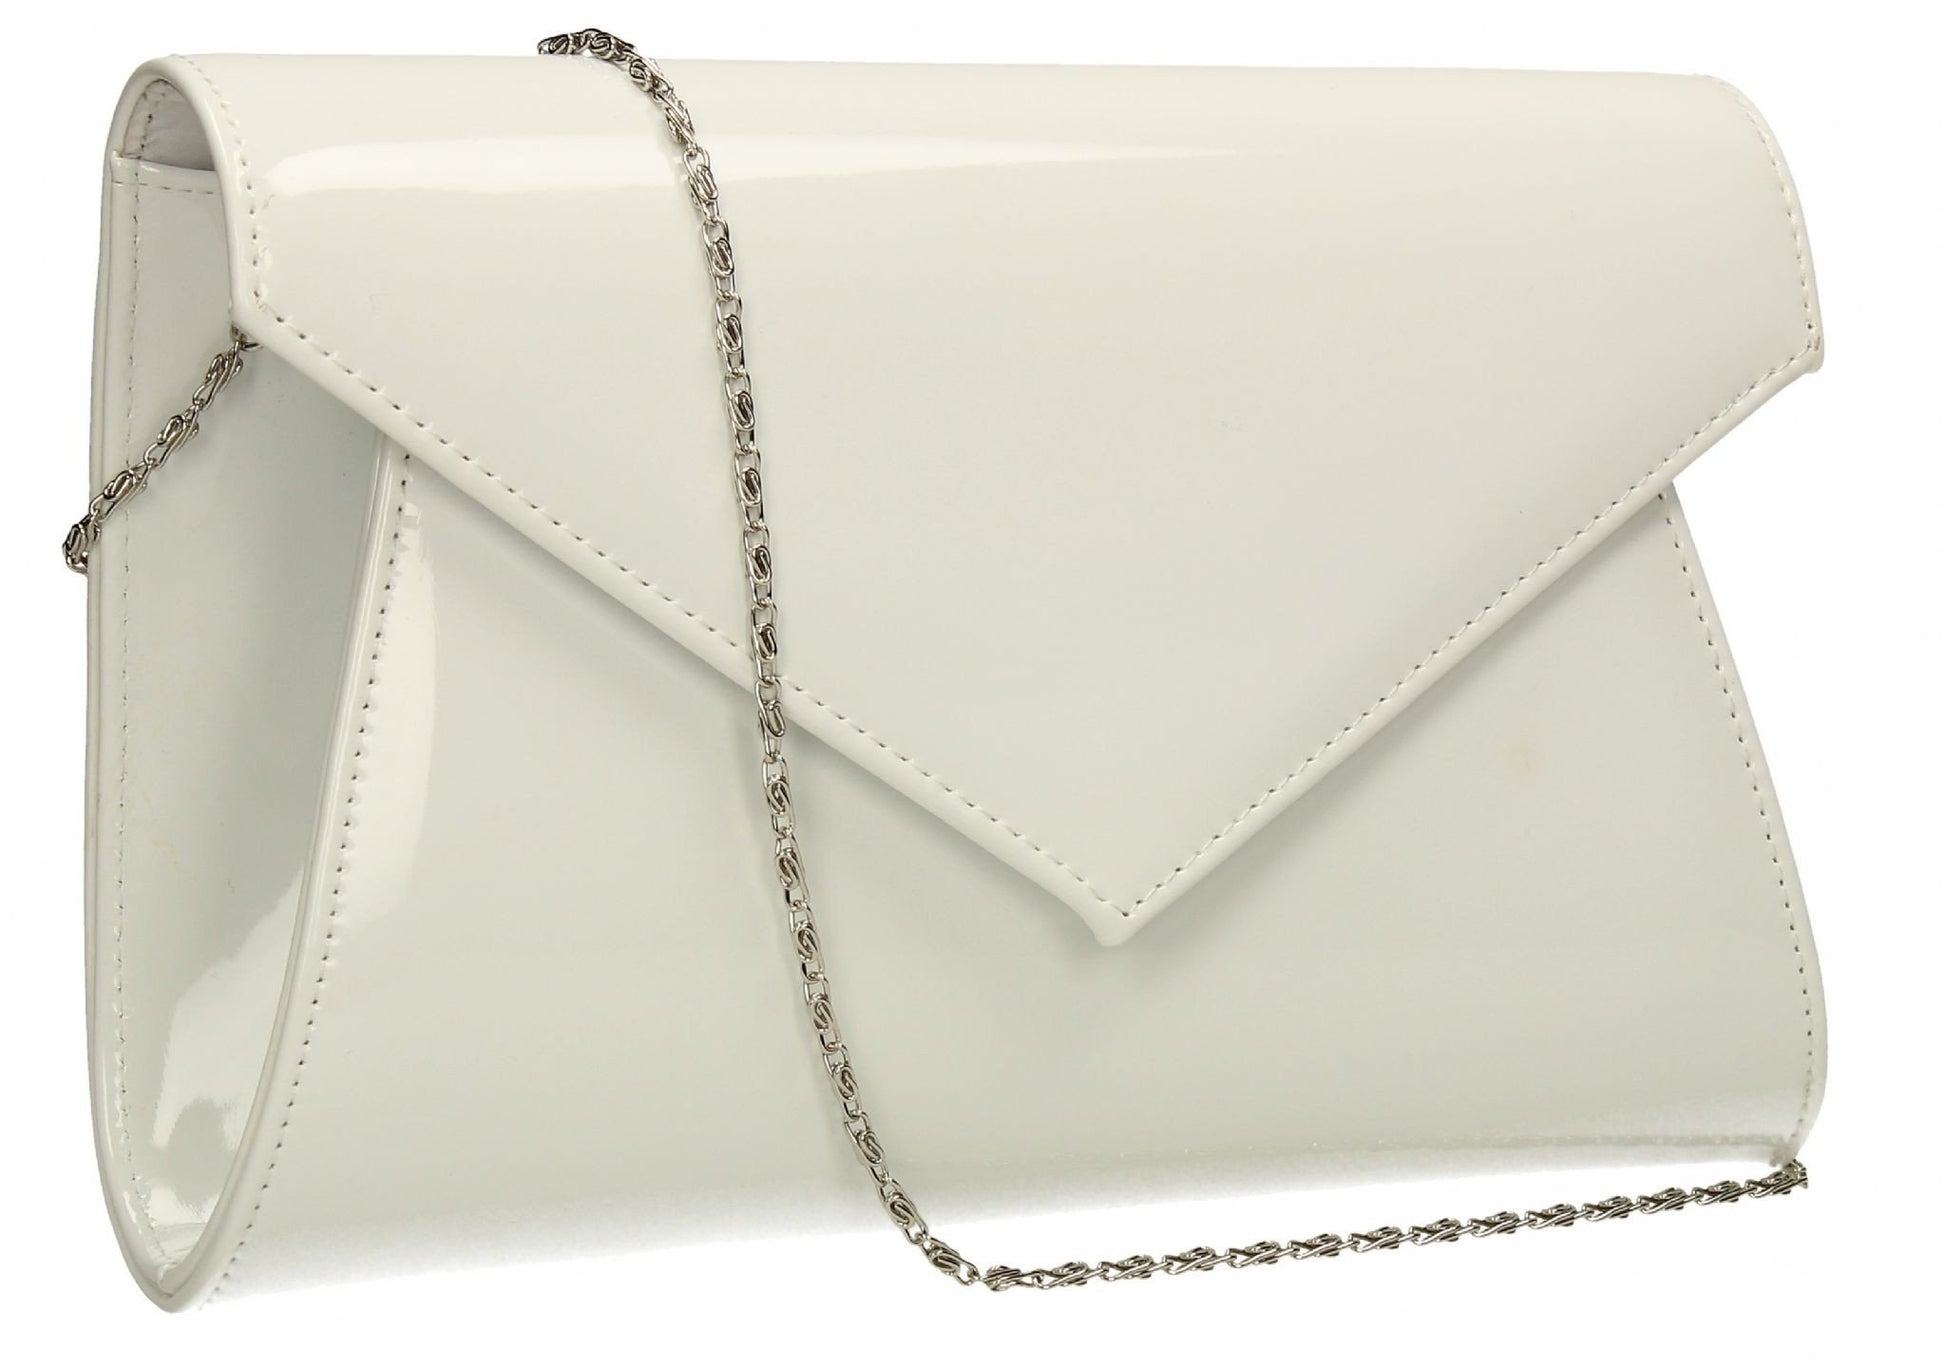 SWANKYSWANS Chrissy Envelope Clutch Bag White Cute Cheap Clutch Bag For Weddings School and Work